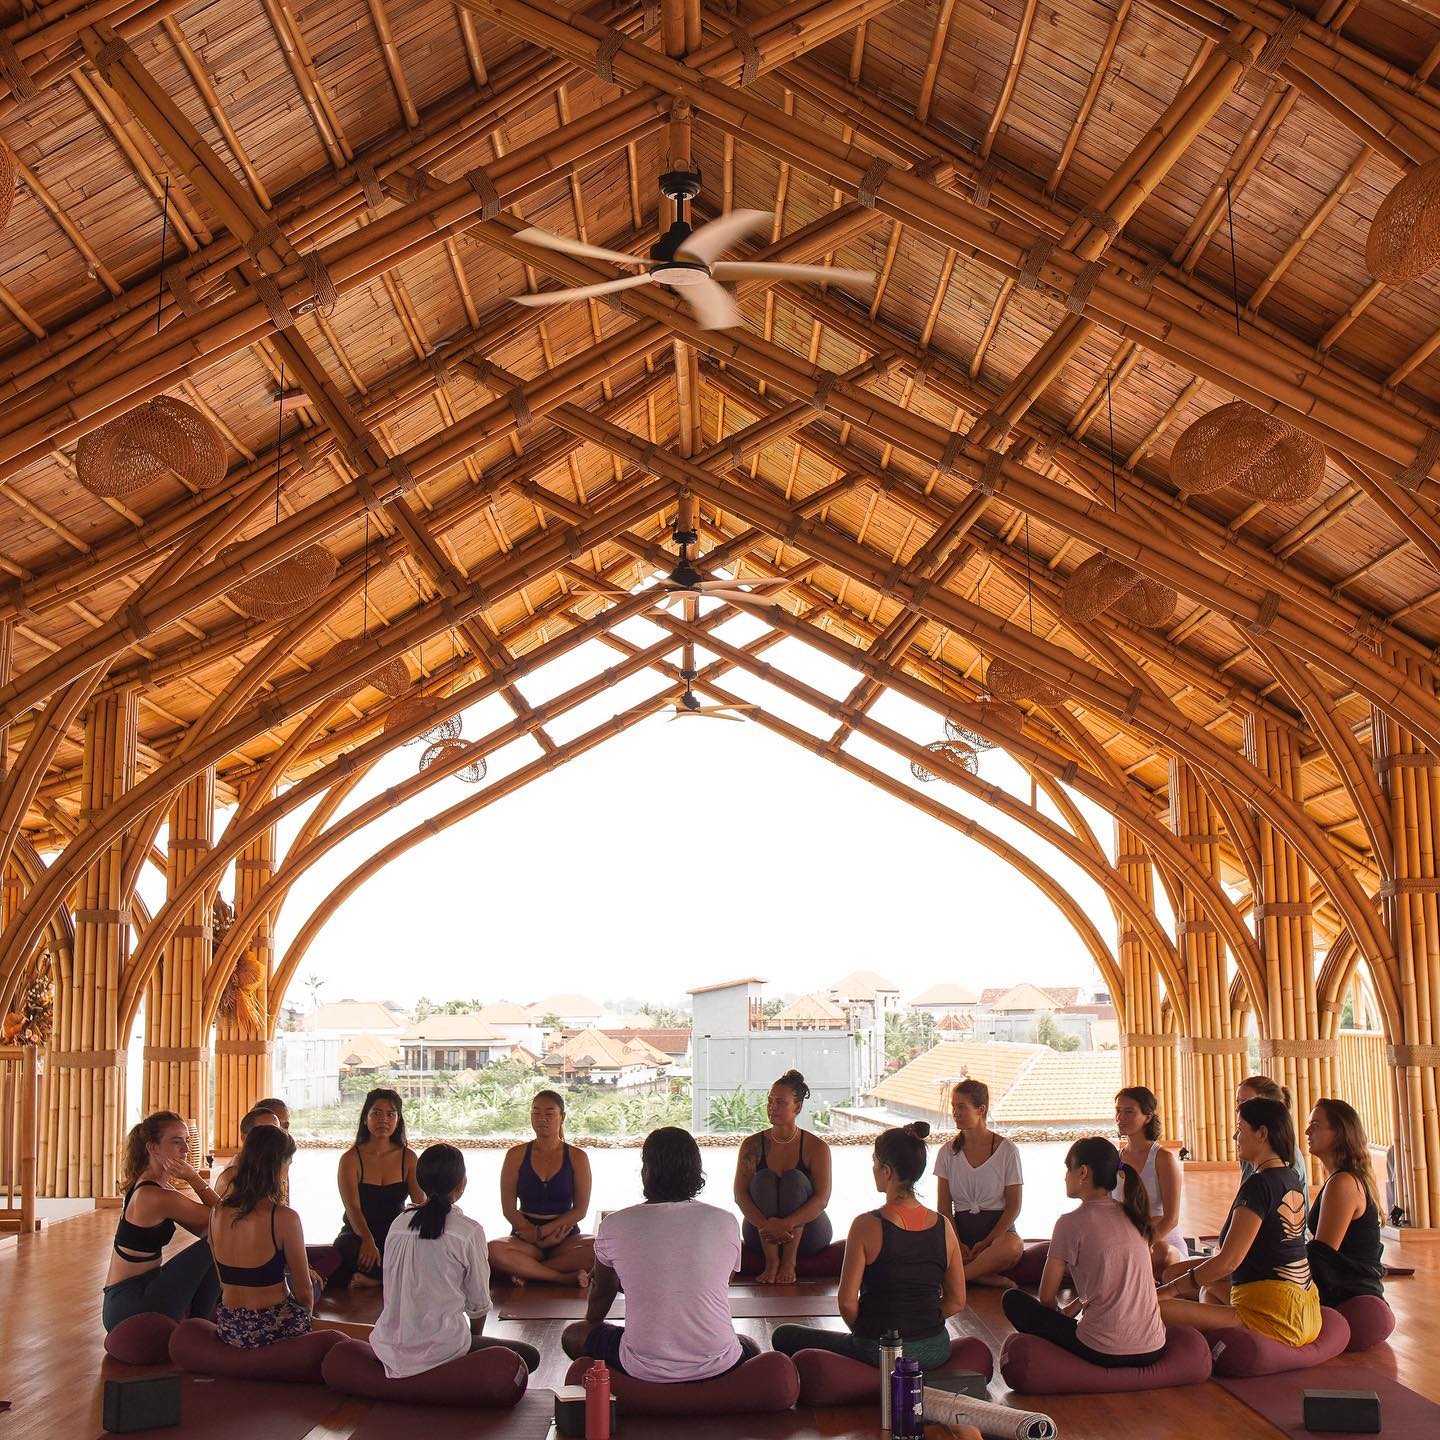 bali coworking spaces - bwork bali rooftop yoga studio